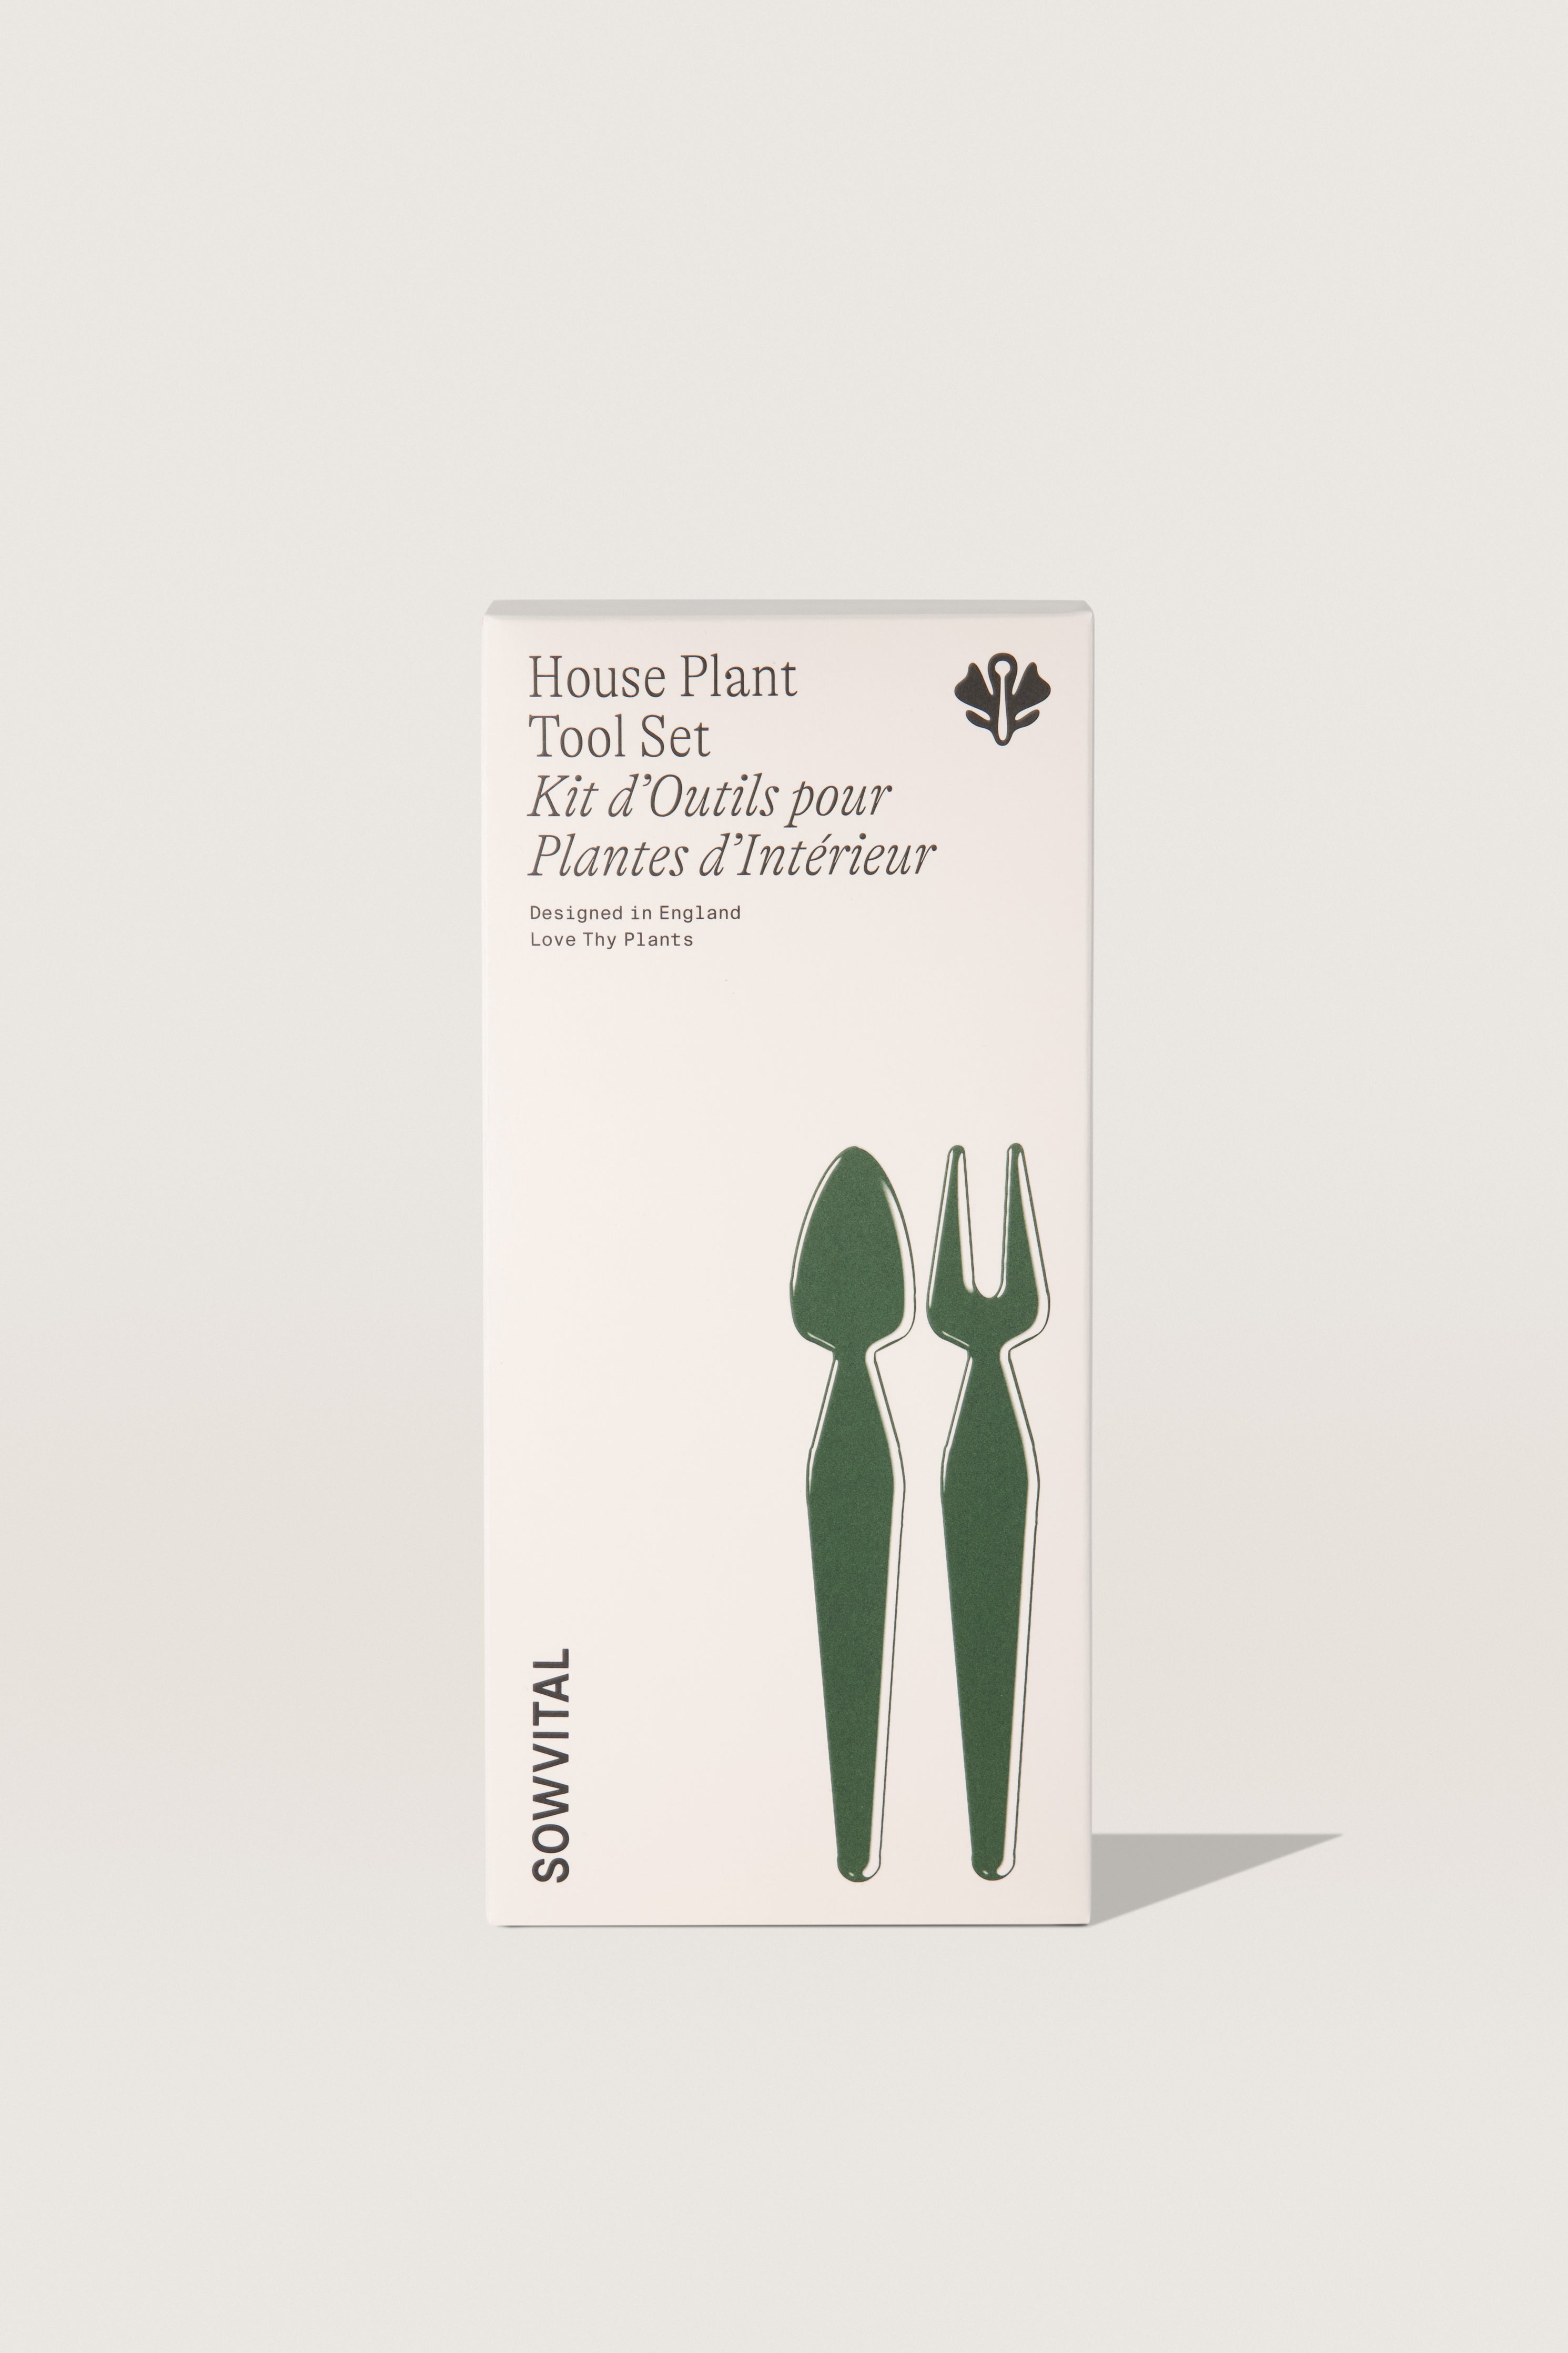 Sowvital house plant tool set packaging box.